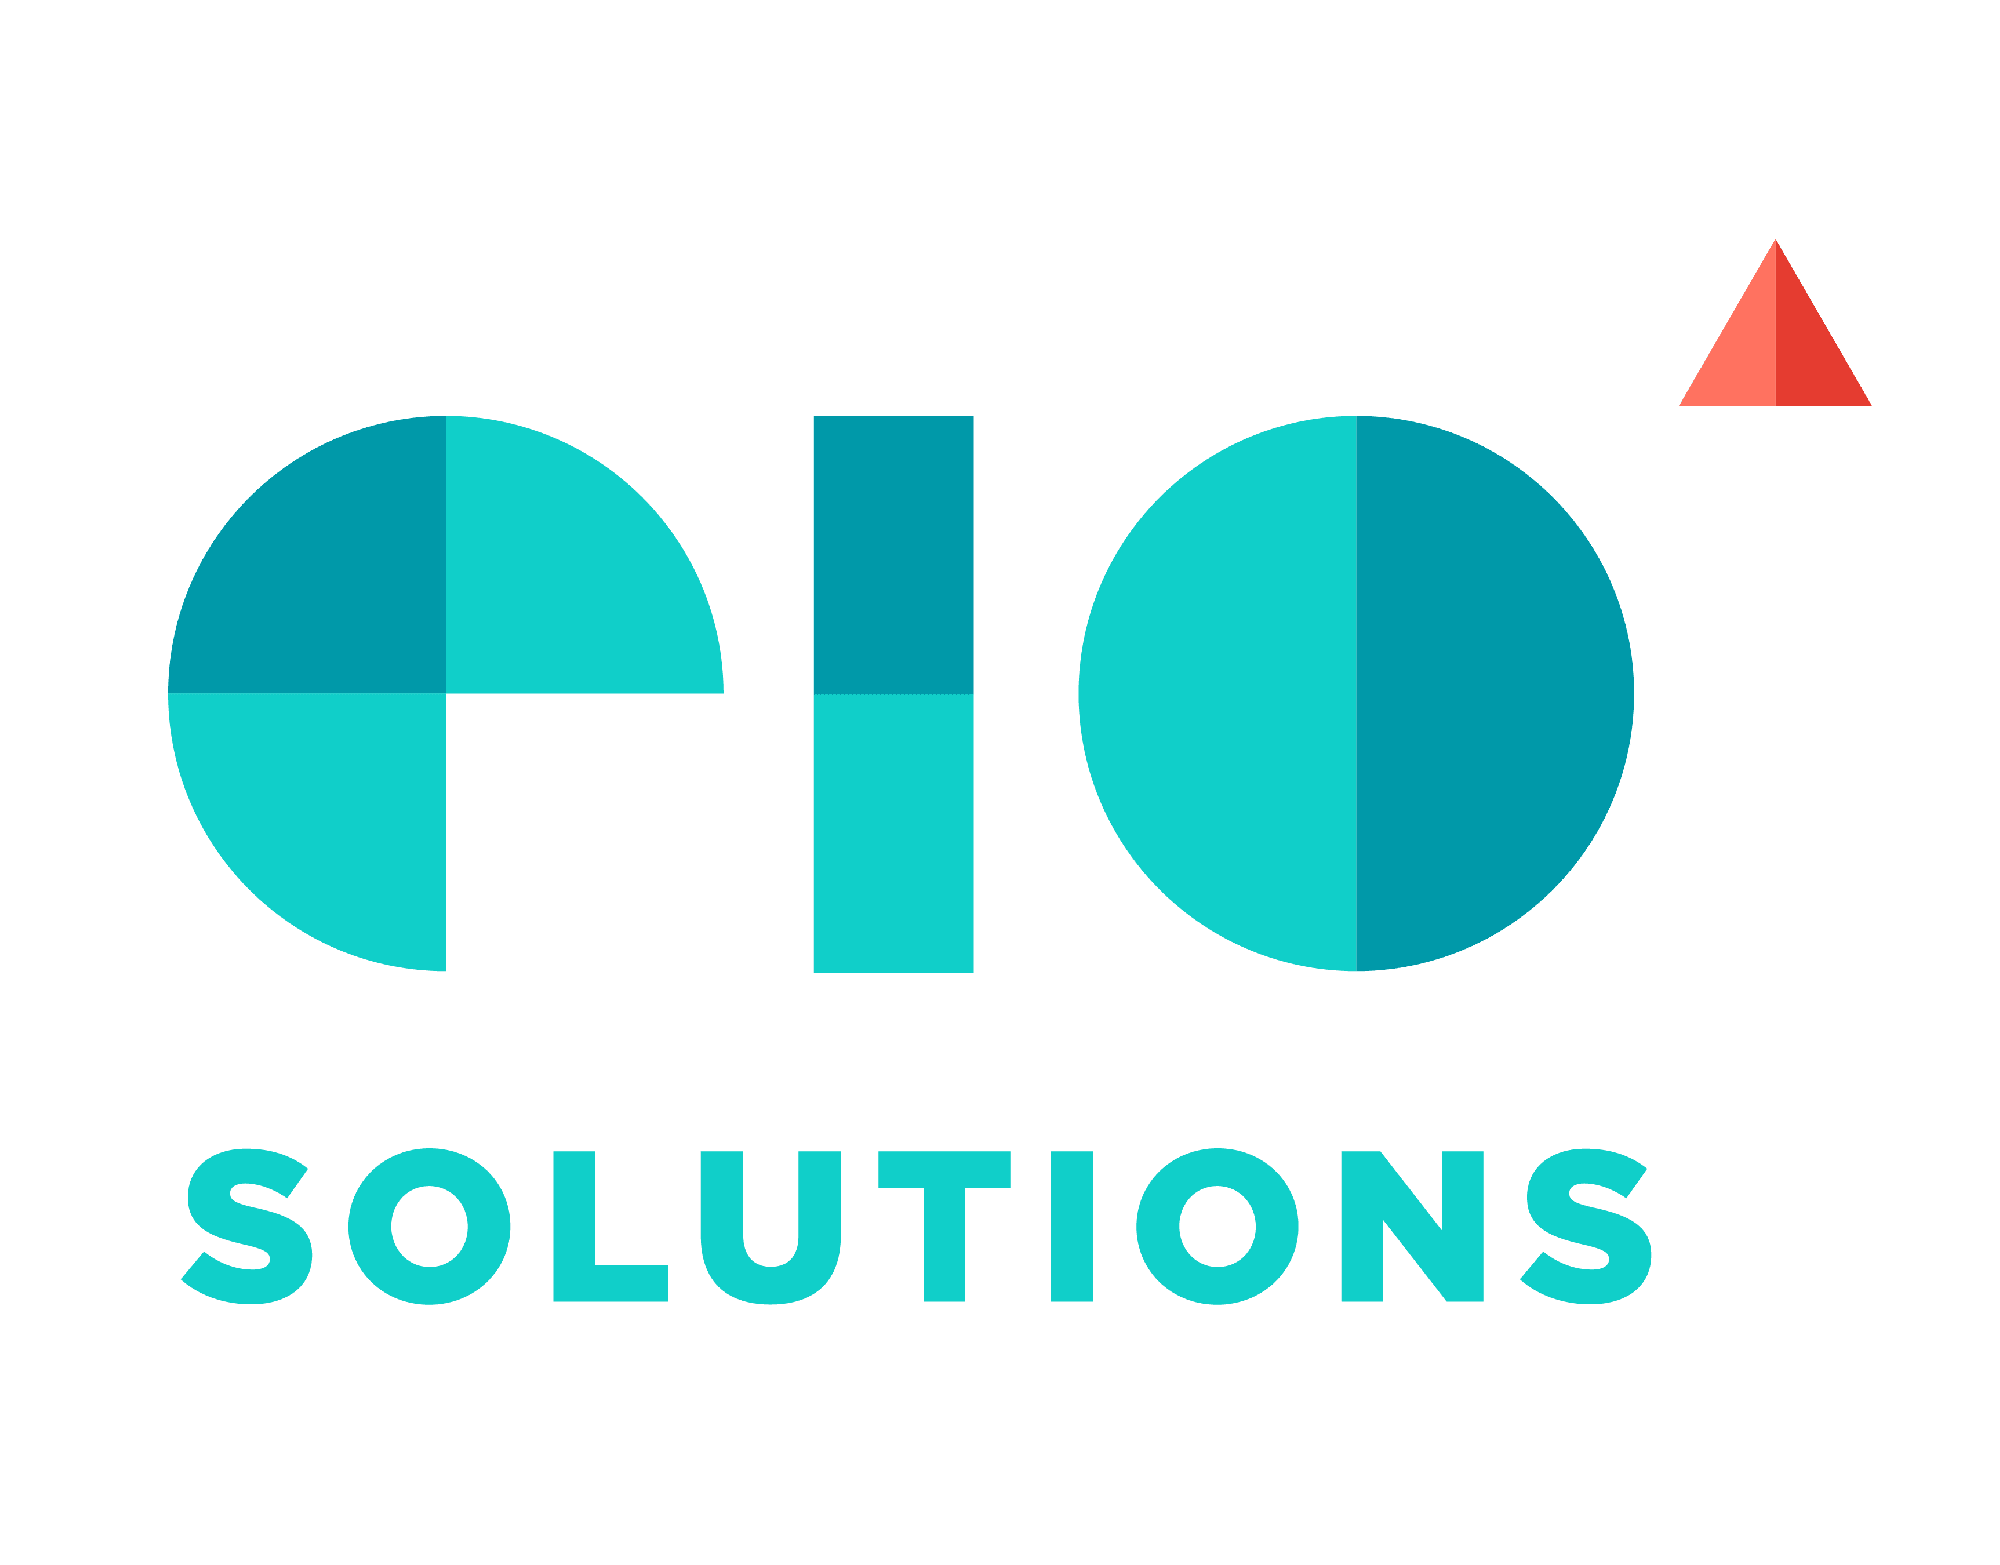 EIO Solutions logo